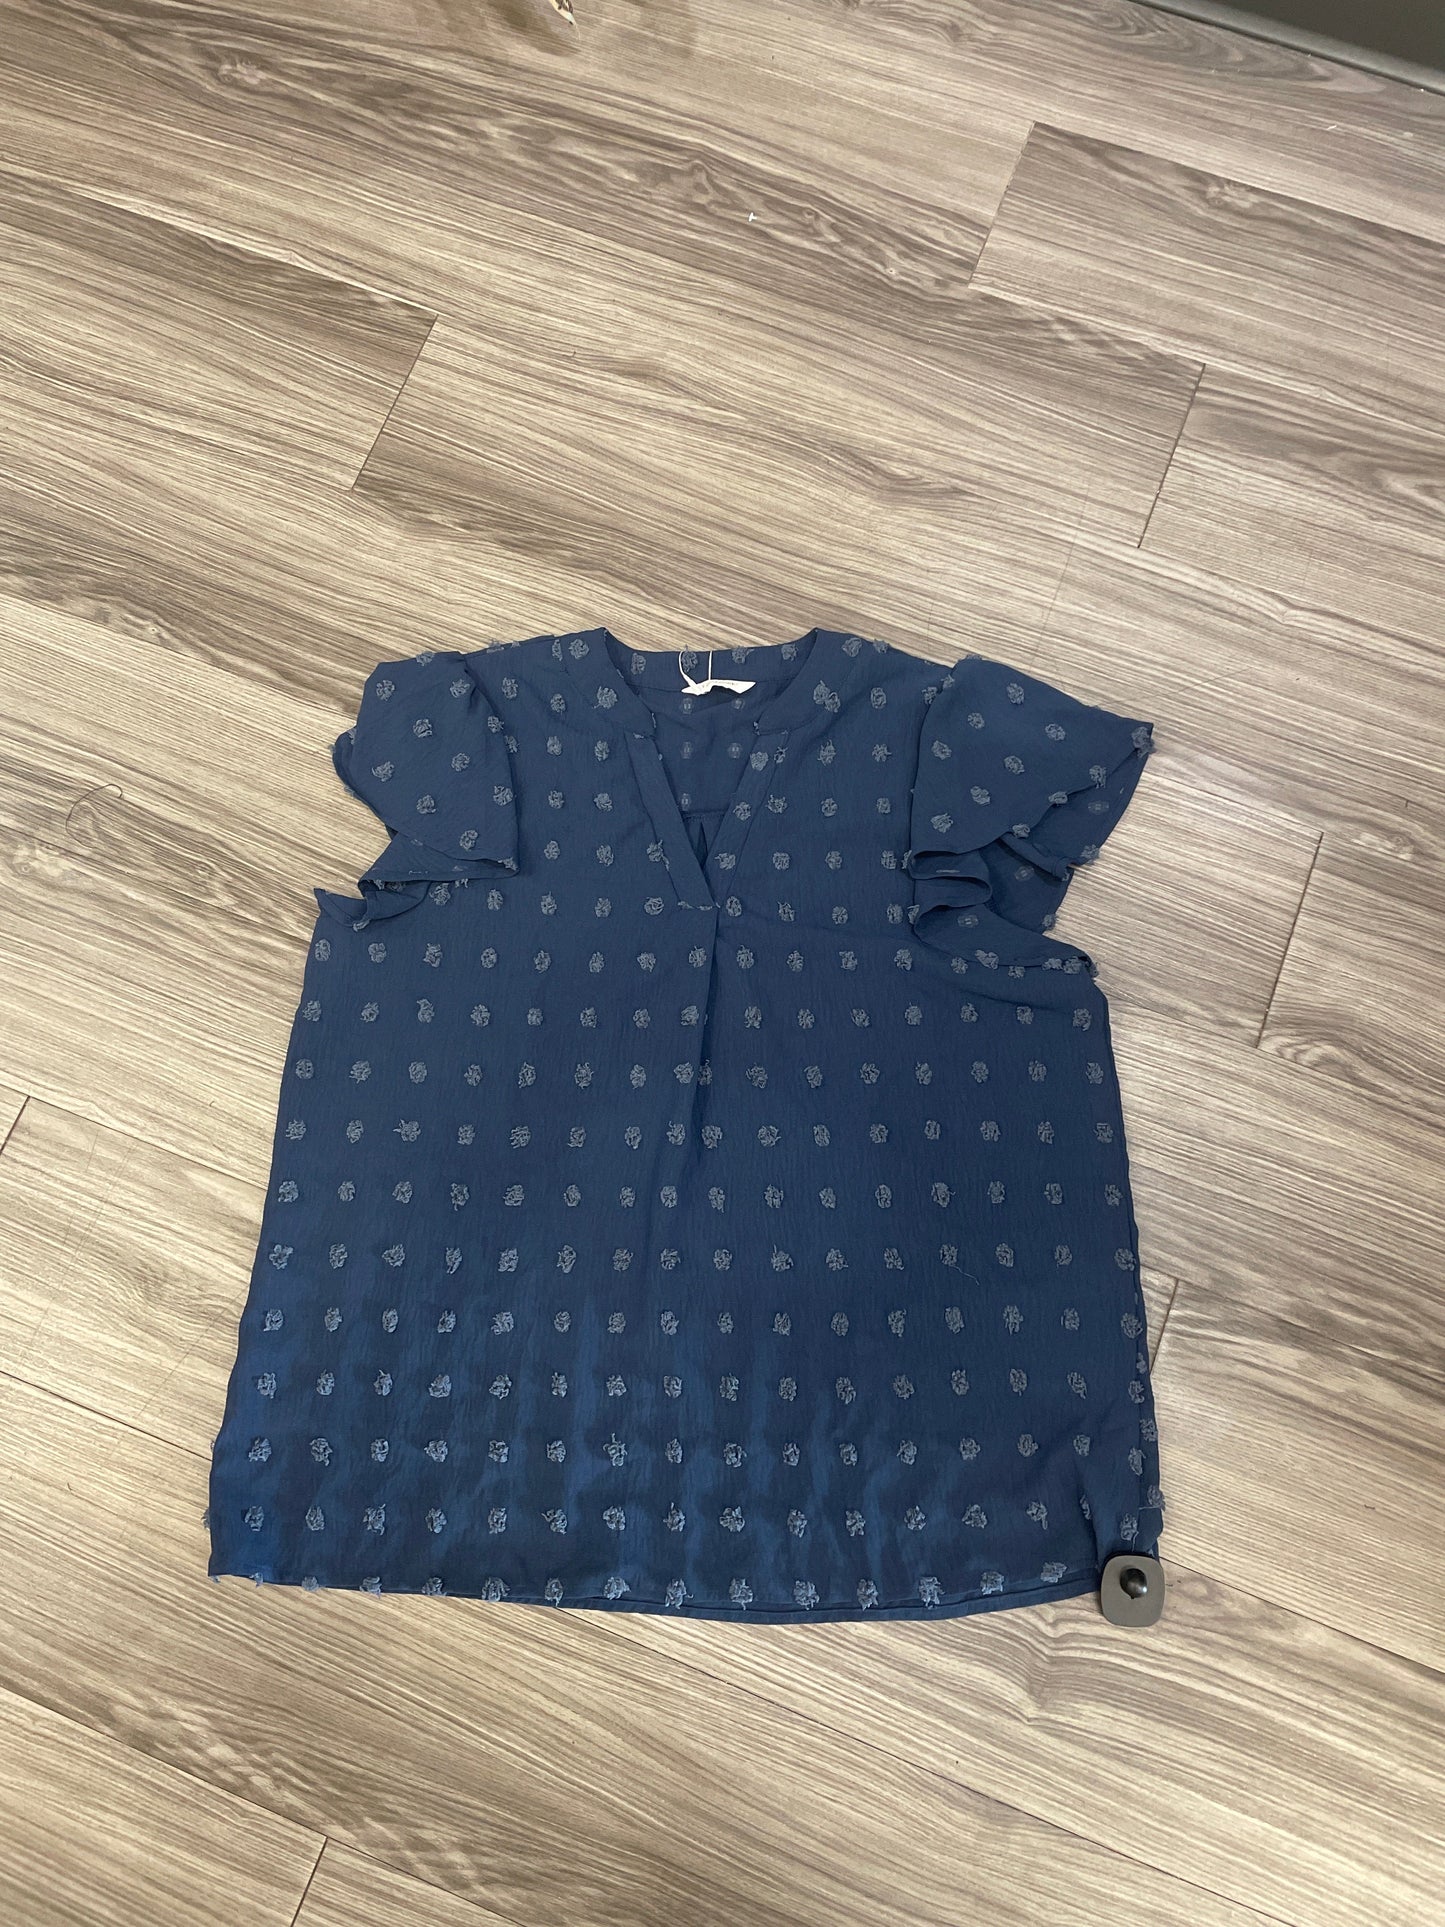 Blue Top Short Sleeve Clothes Mentor, Size Xl